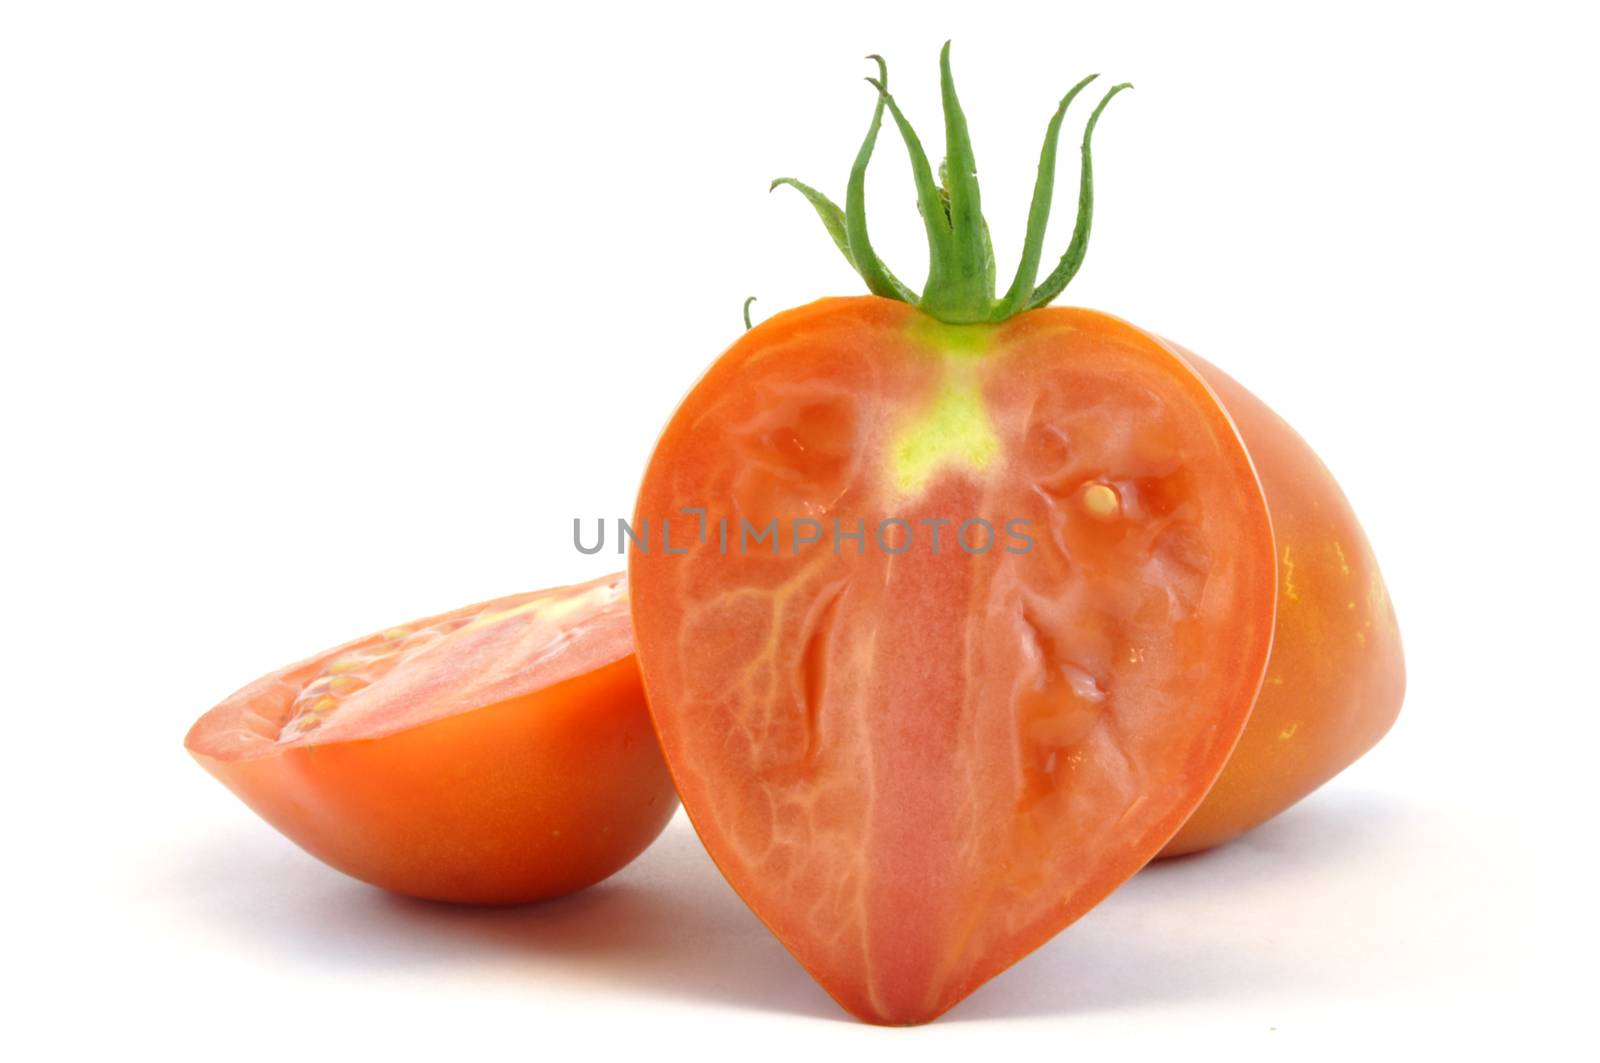 Fresh organic homegrown tomatoes on white background